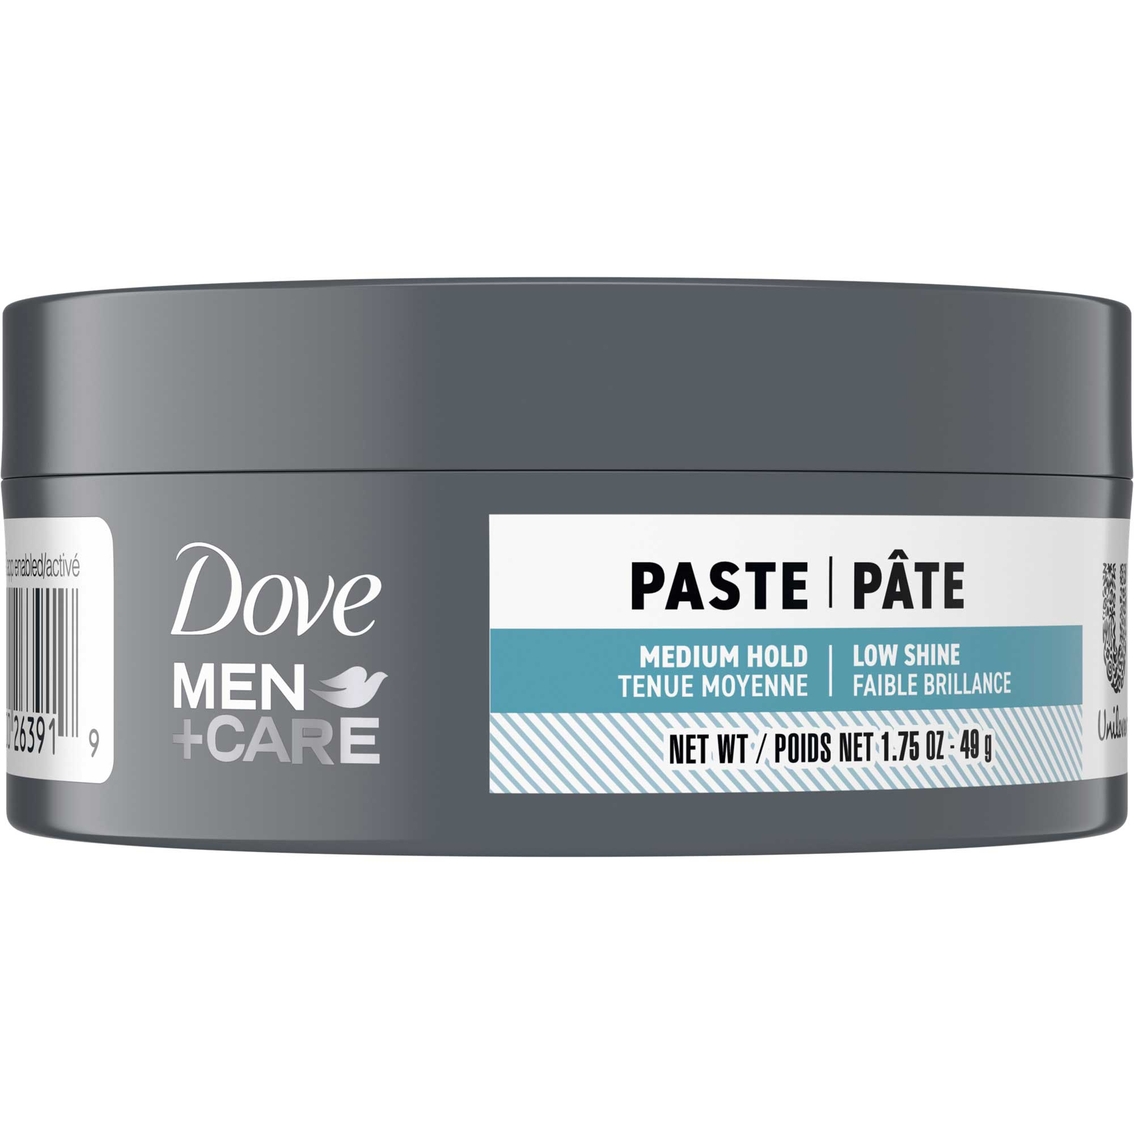 Dove Men + Care Textured Look Medium Hold Matte Finish Hair Paste Gel 1.75 oz. - Image 1 of 2